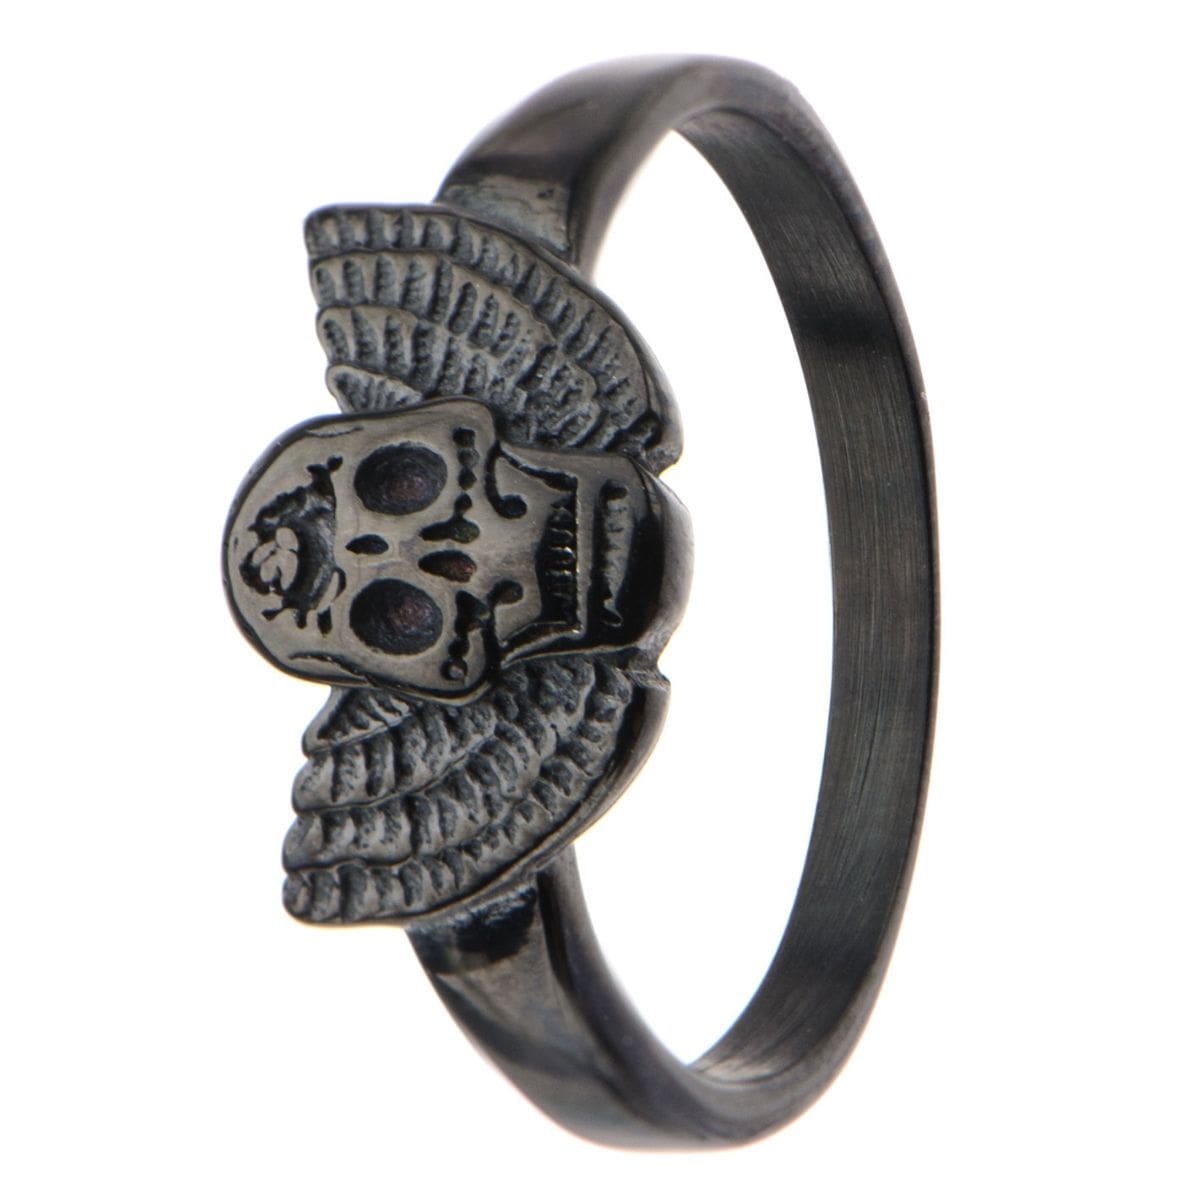 INOX JEWELRY Rings Black Stainless Steel Skull with Wings Ring